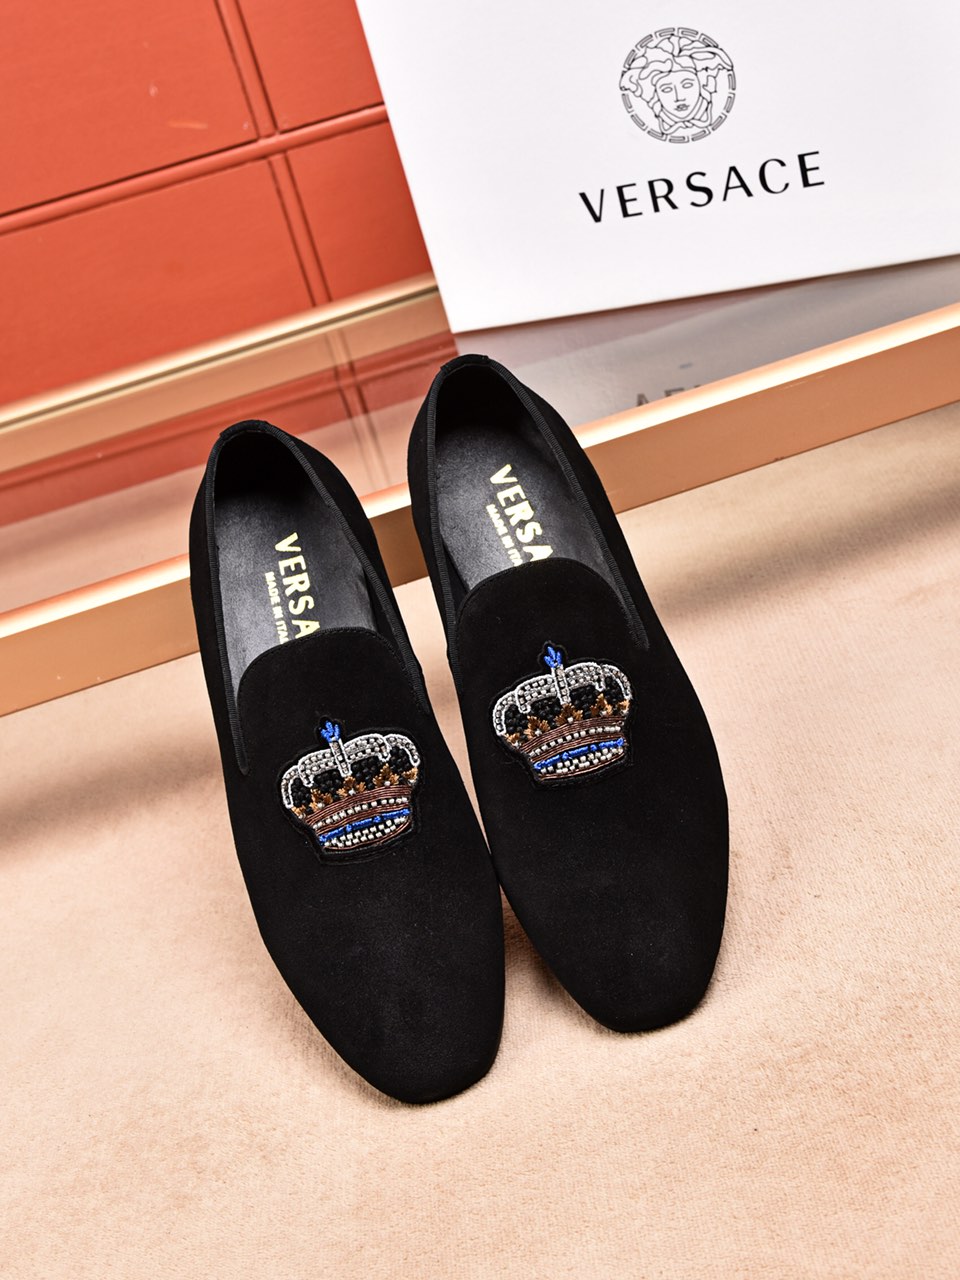 versace loafer shoes for men 